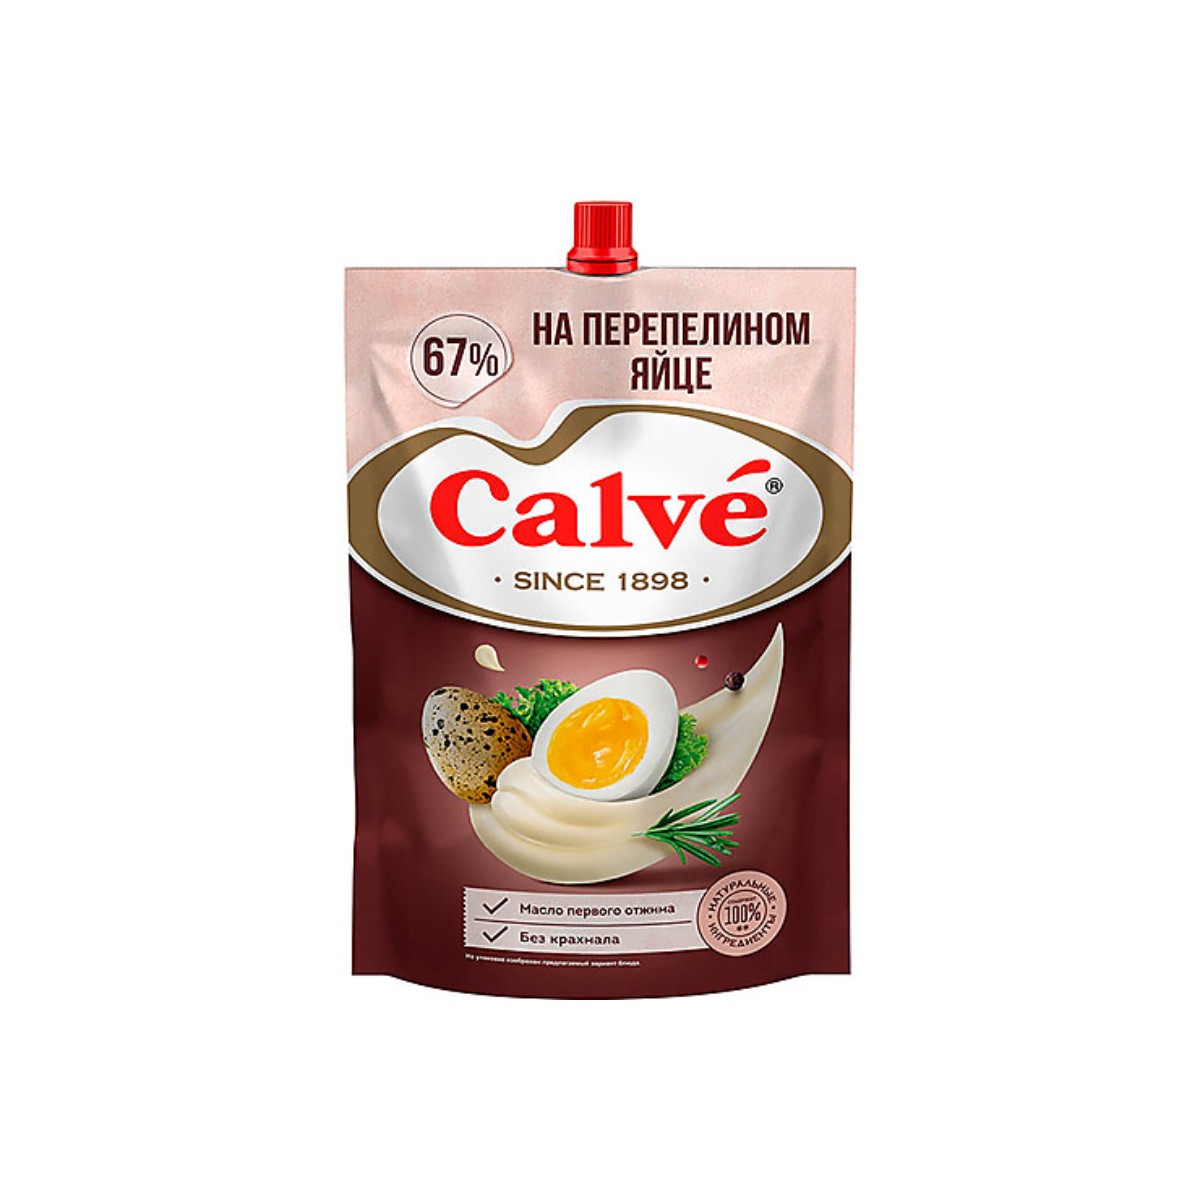 Майонез Calve На перепелином яйце 67%, 2 шт по 700 г